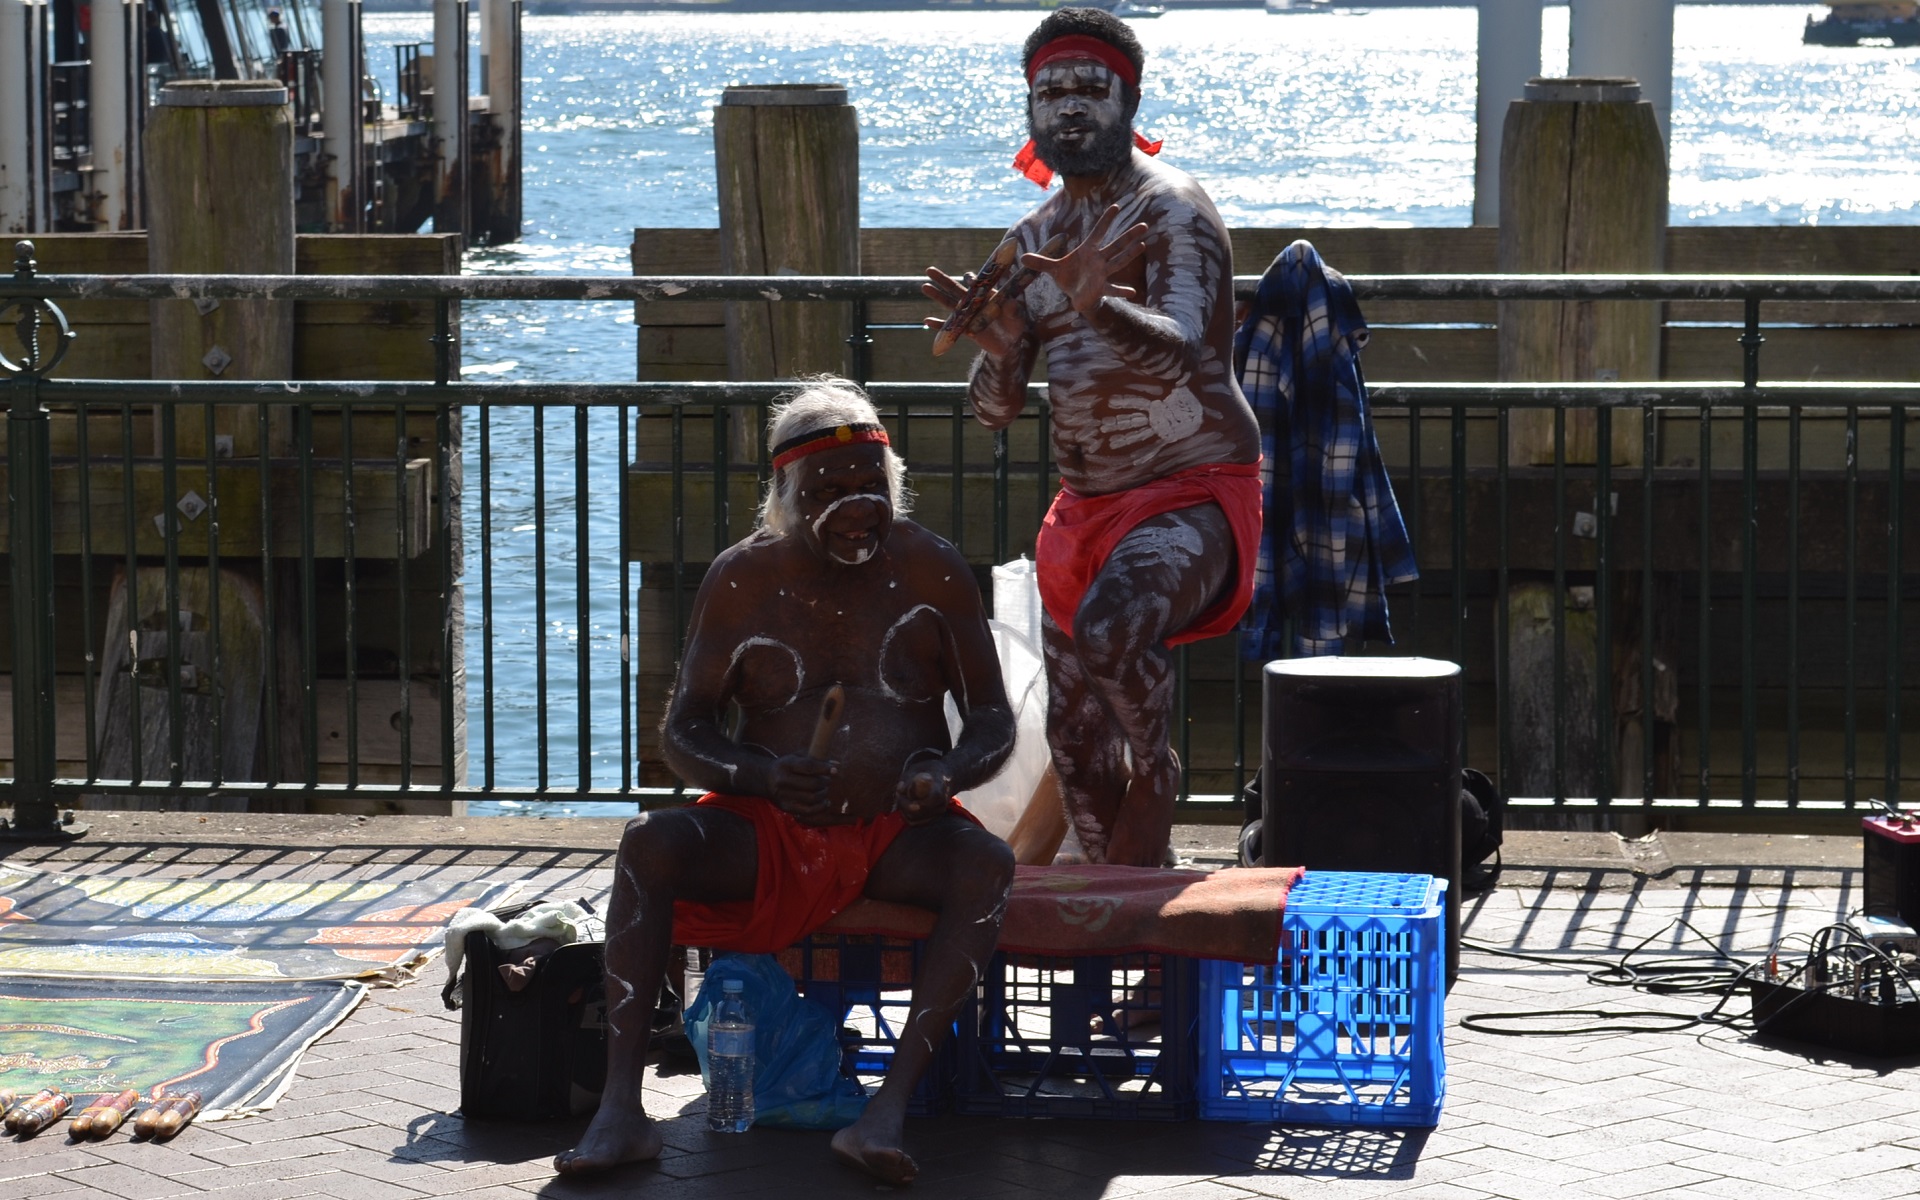 Aboriginals Busking at Circular Quay, Sydney Australia by lonewolf6738